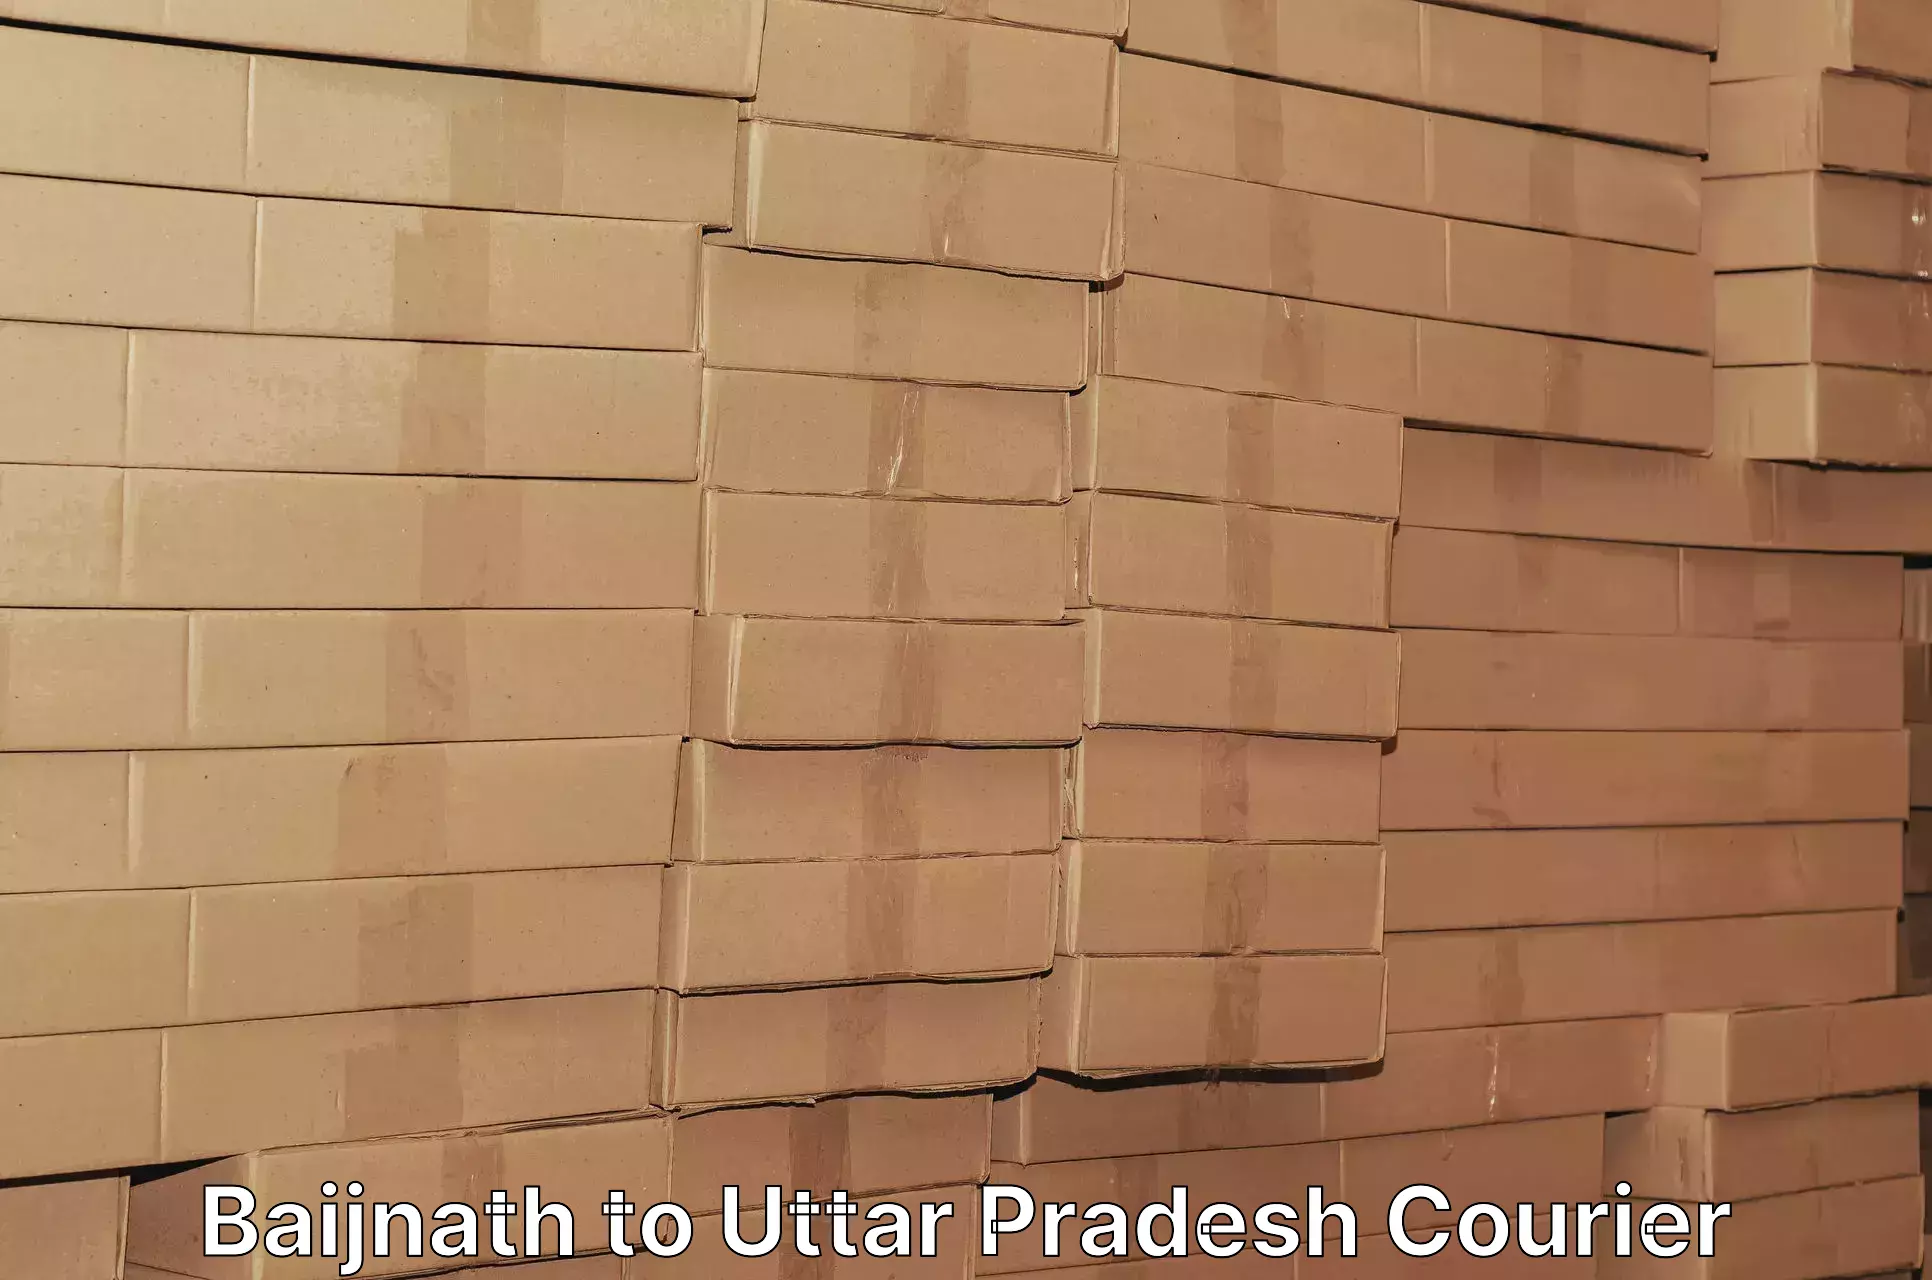 Urgent courier needs in Baijnath to Aunrihar